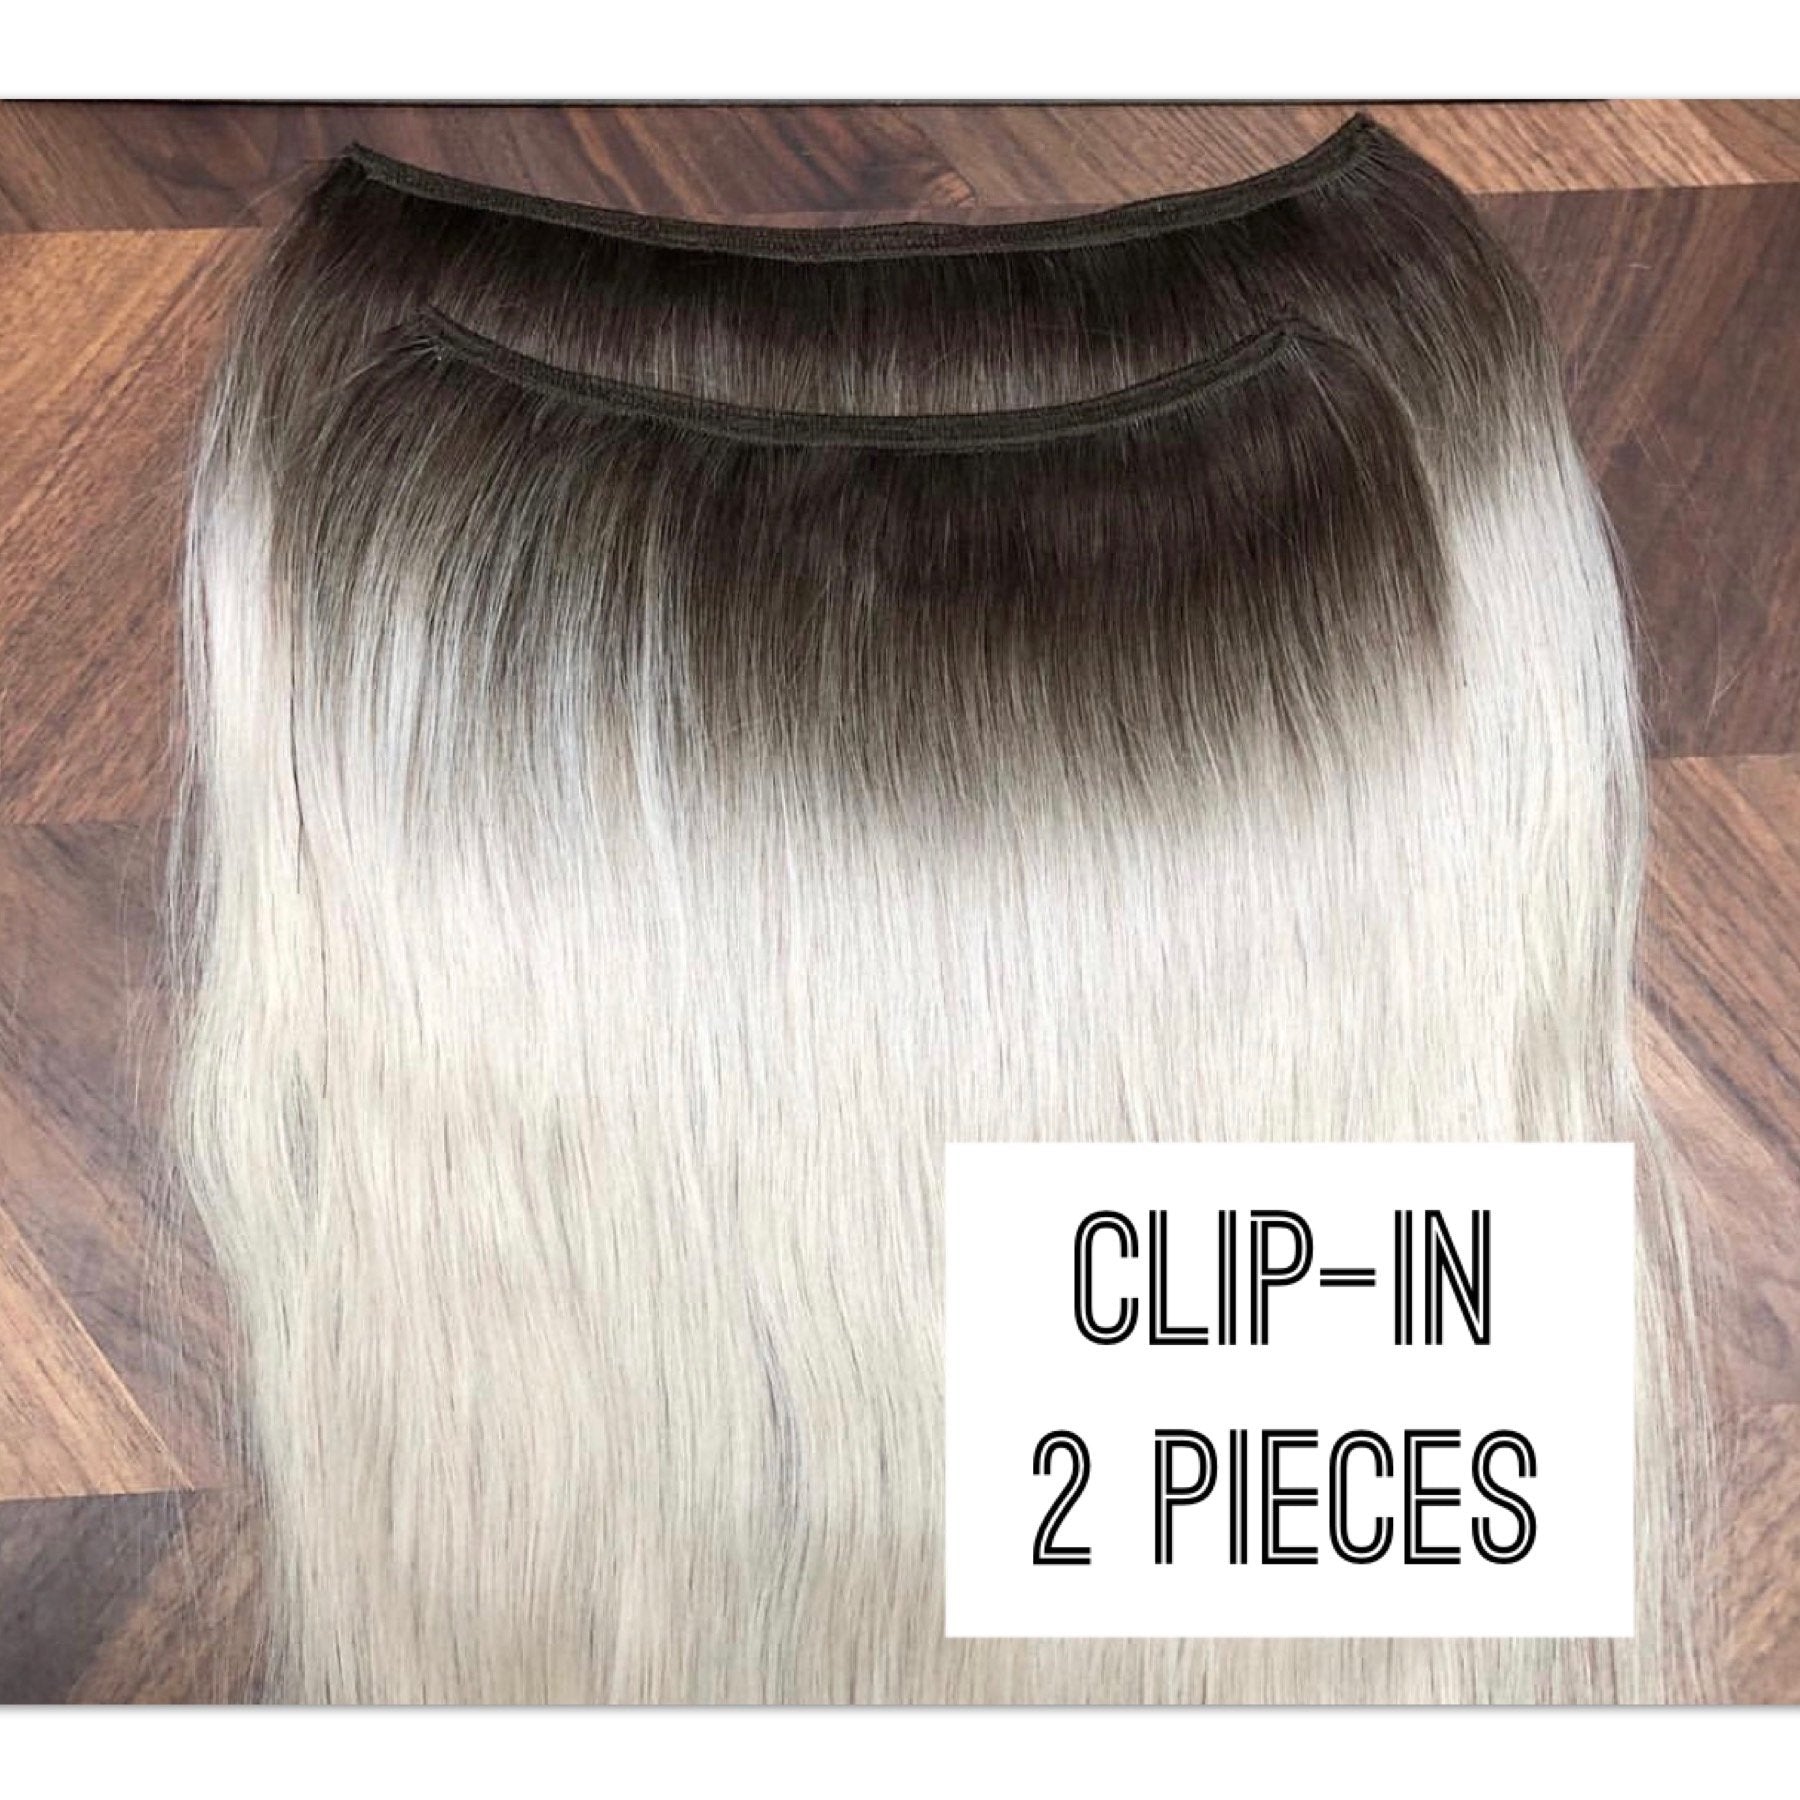 Clips Ombre 2 and DB4 Color GVA hair_Retail price - GVA hair